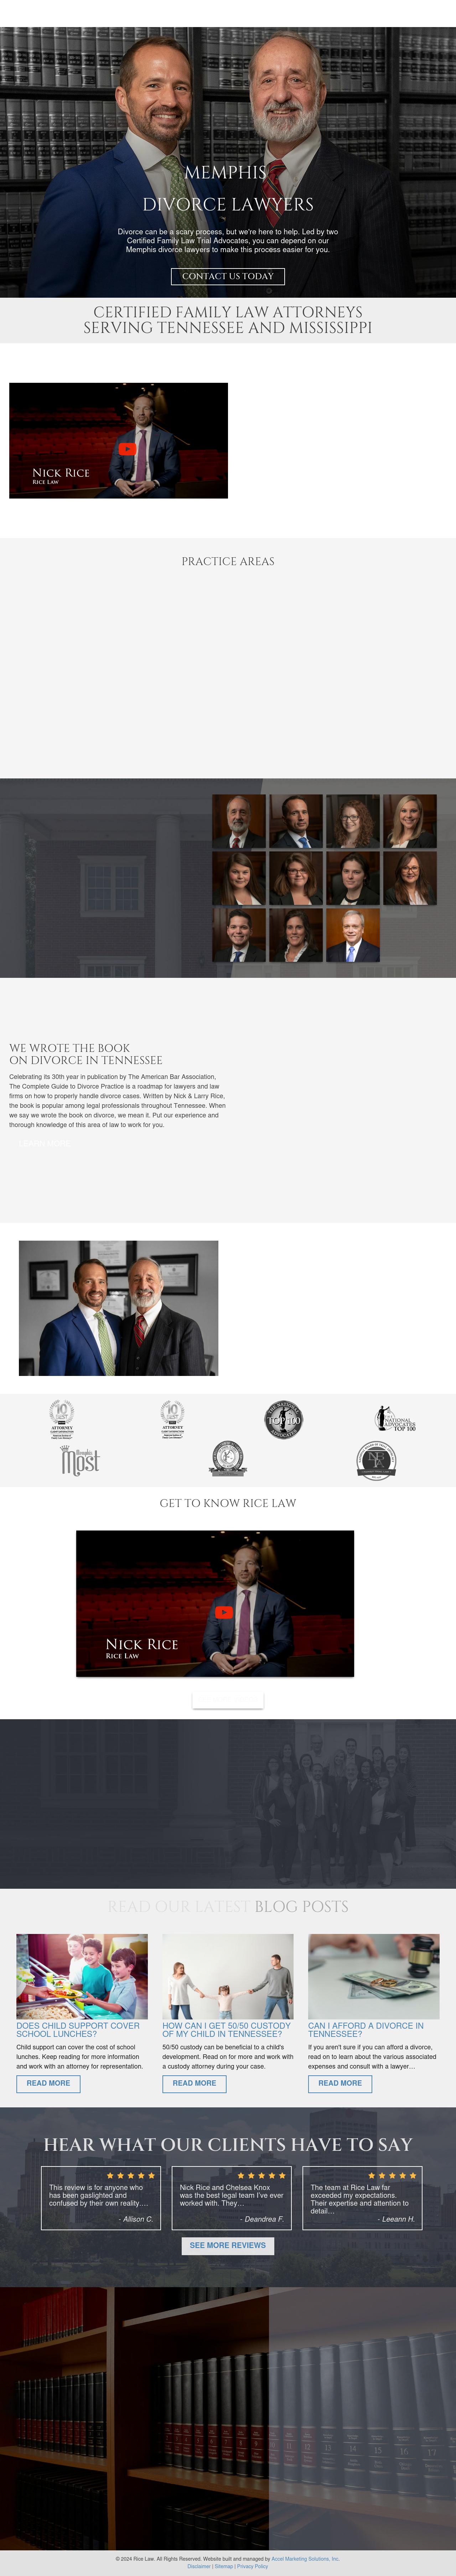 Rice Divorce Team - Memphis TN Lawyers